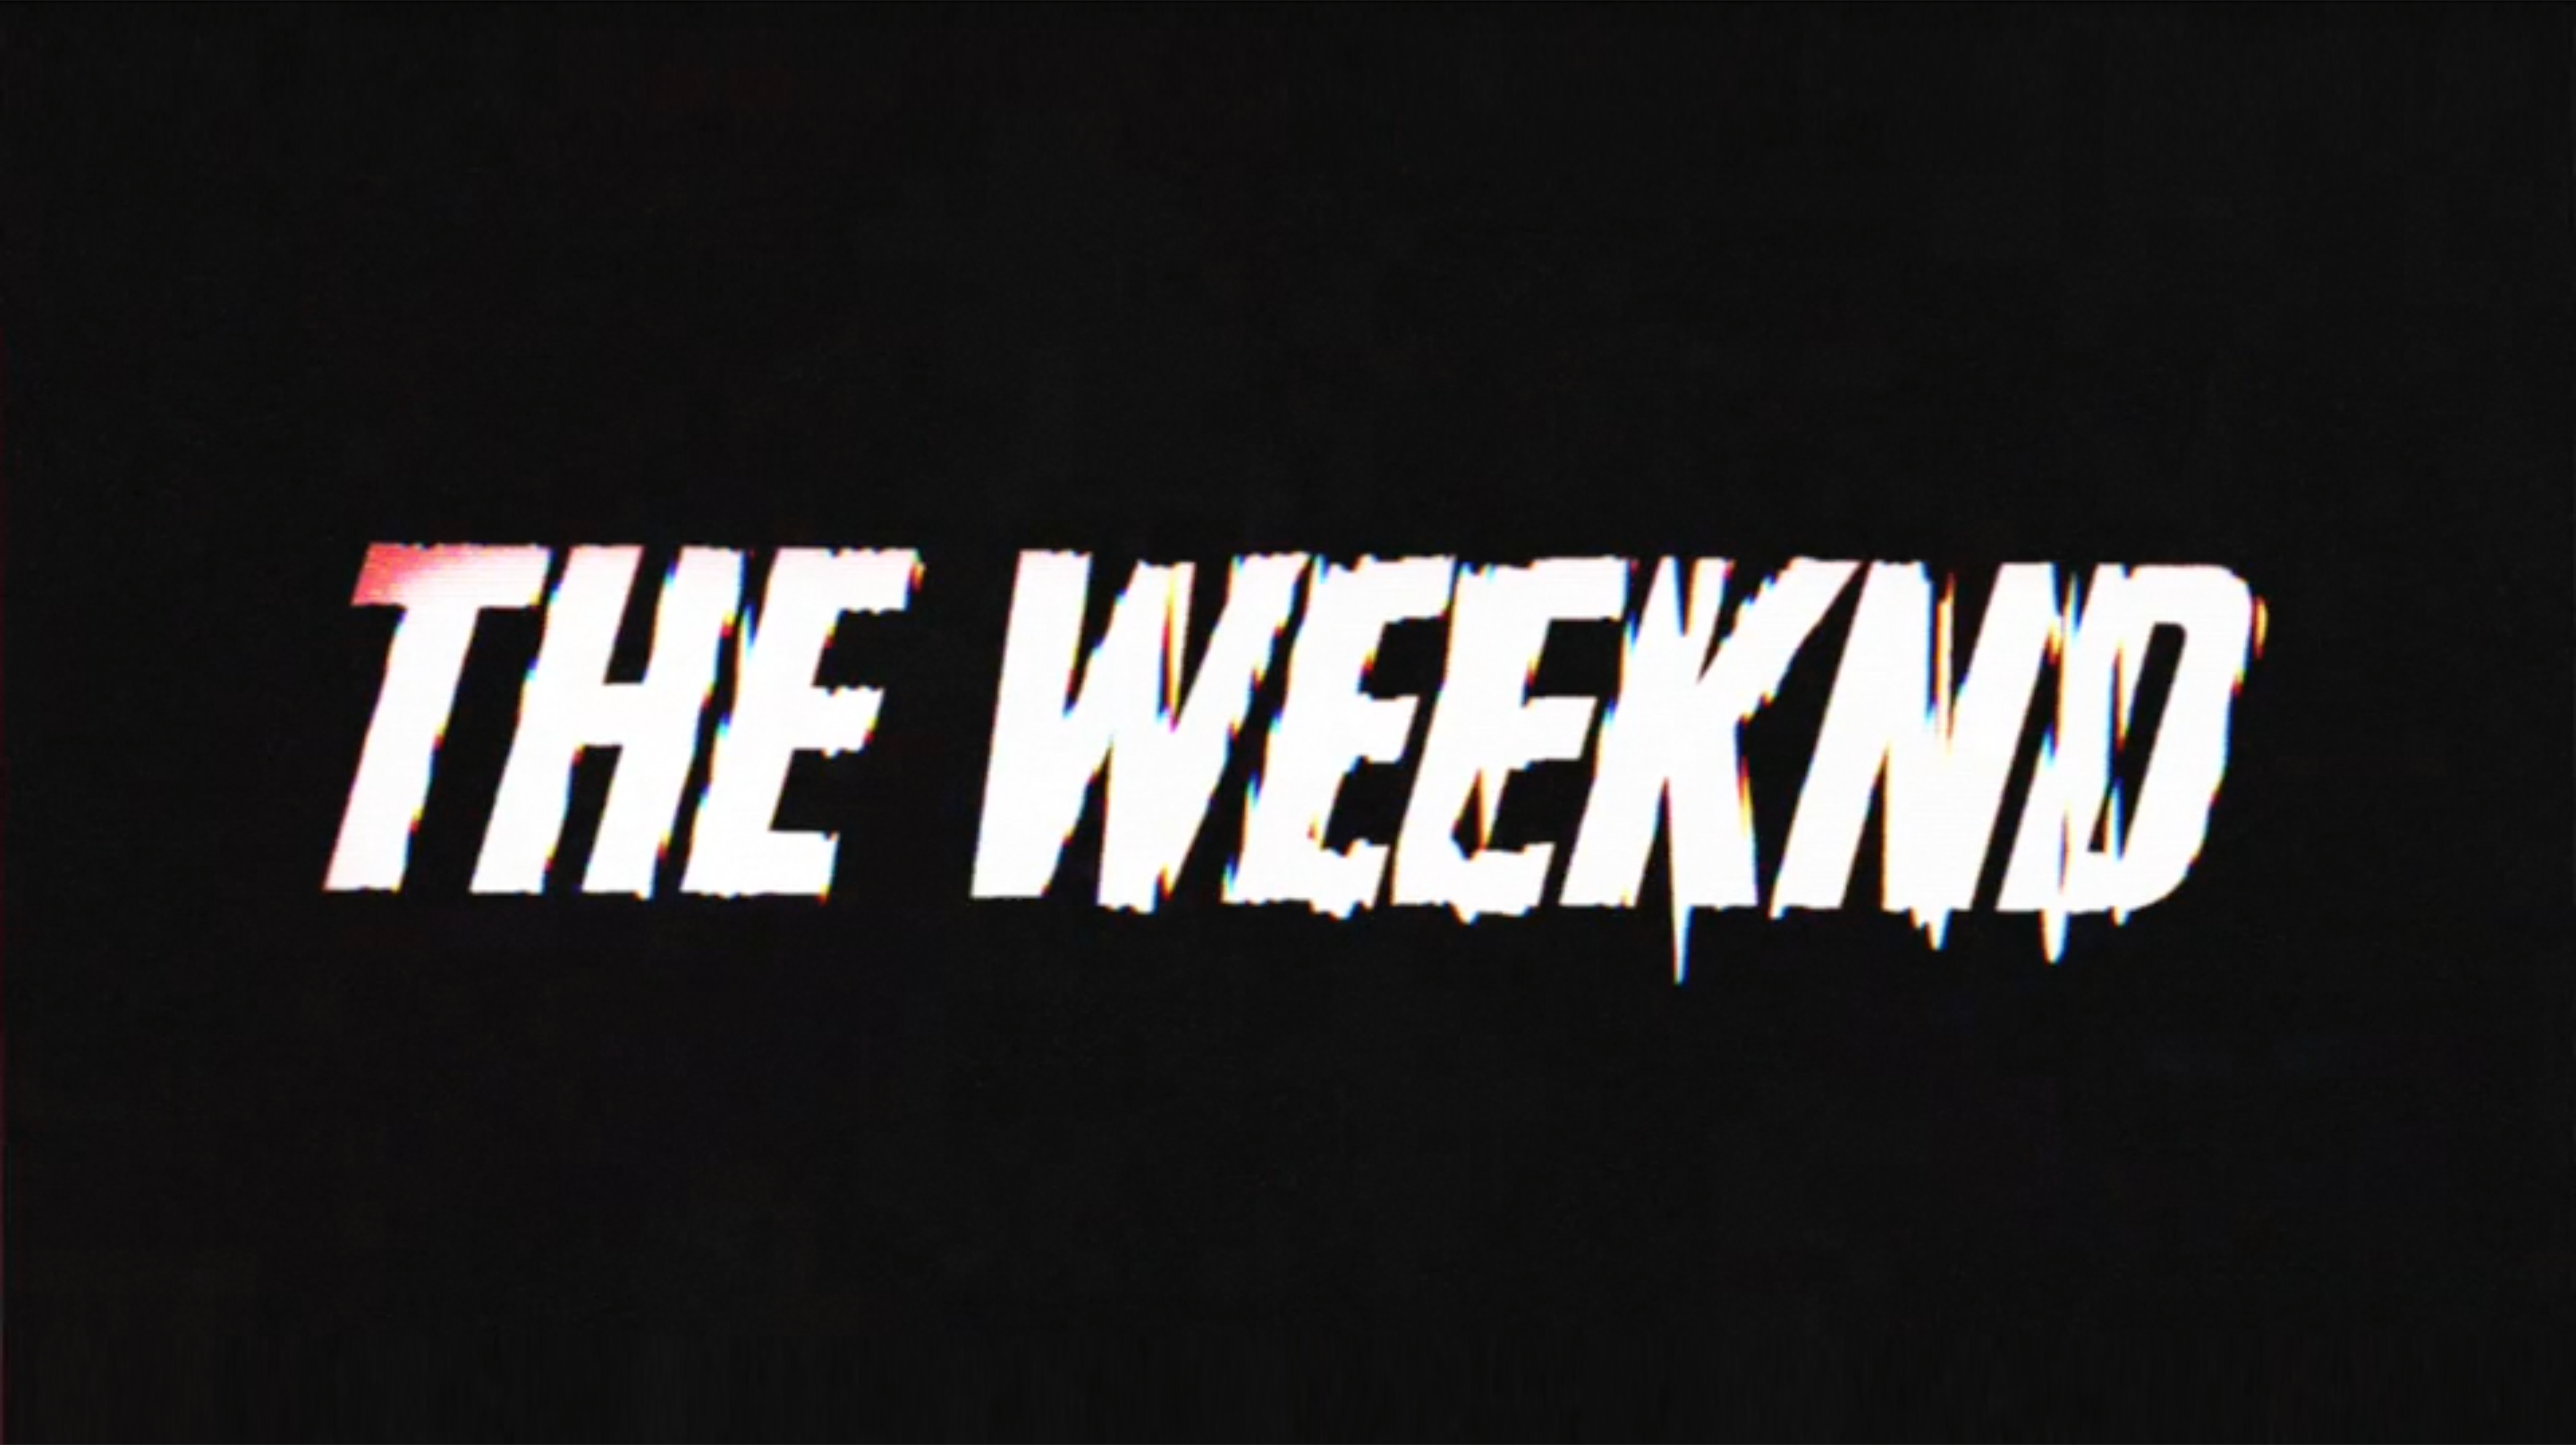 Включи уикенда. The Weeknd логотип. The Weeknd надпись. Наклейки the Weeknd. The Weeknd логотип на фоне.